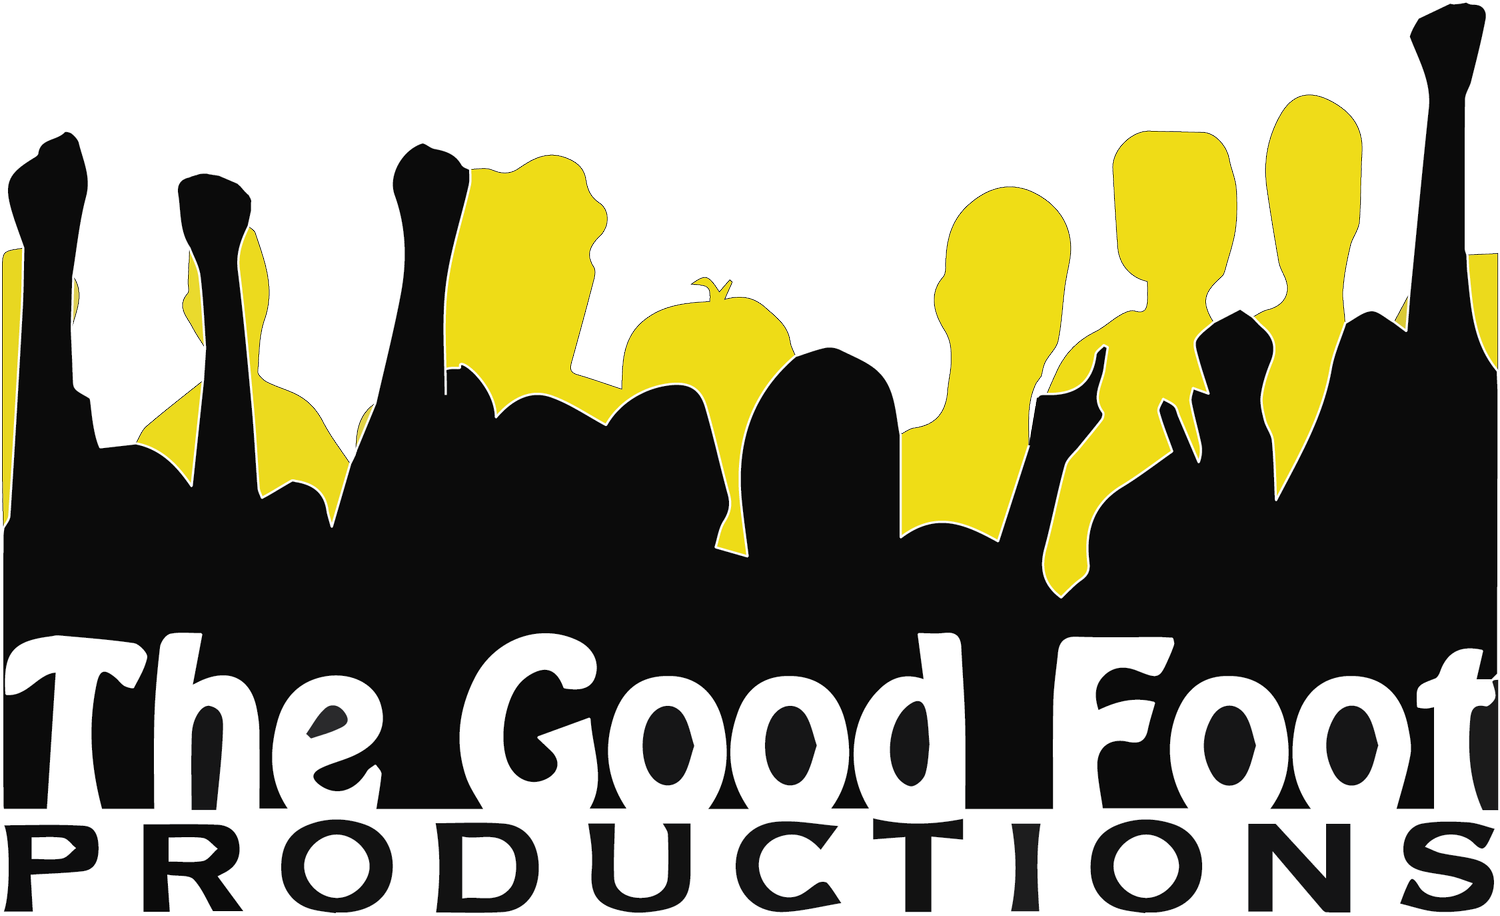 Good Foot Productions